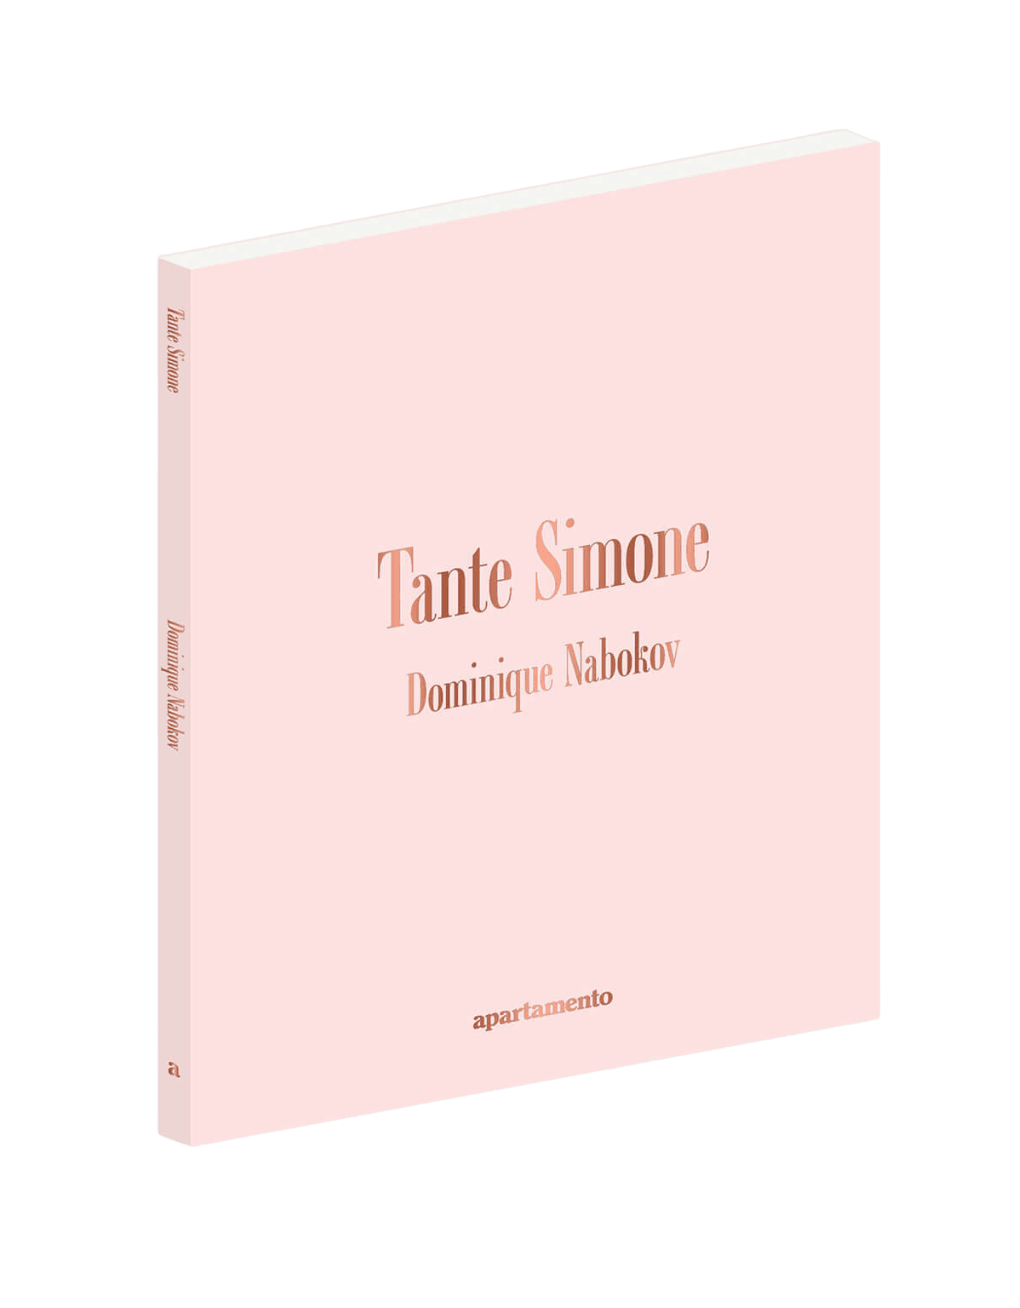 Tante Simone by Dominique Nabokov - ECRU